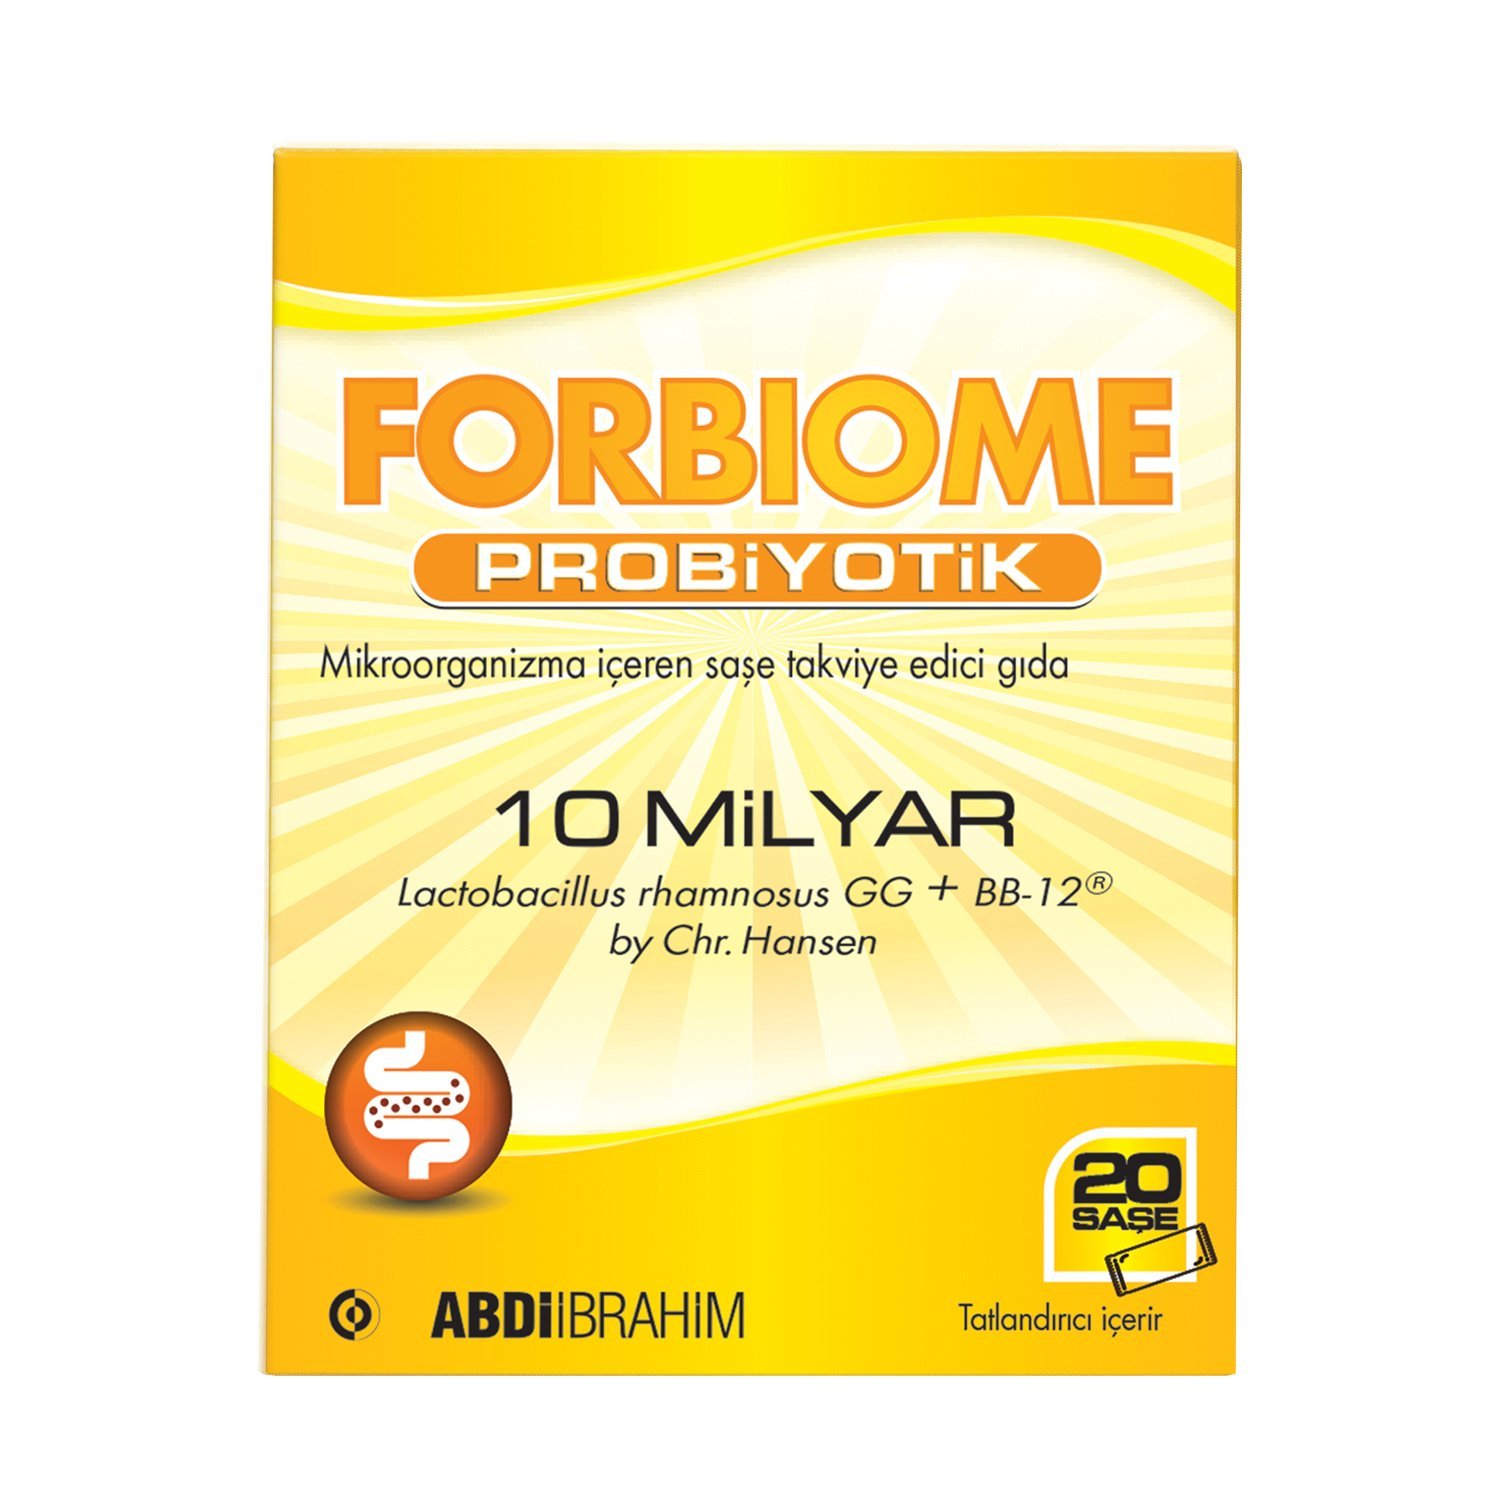 Forbiome Probiyotik 20 Saşe